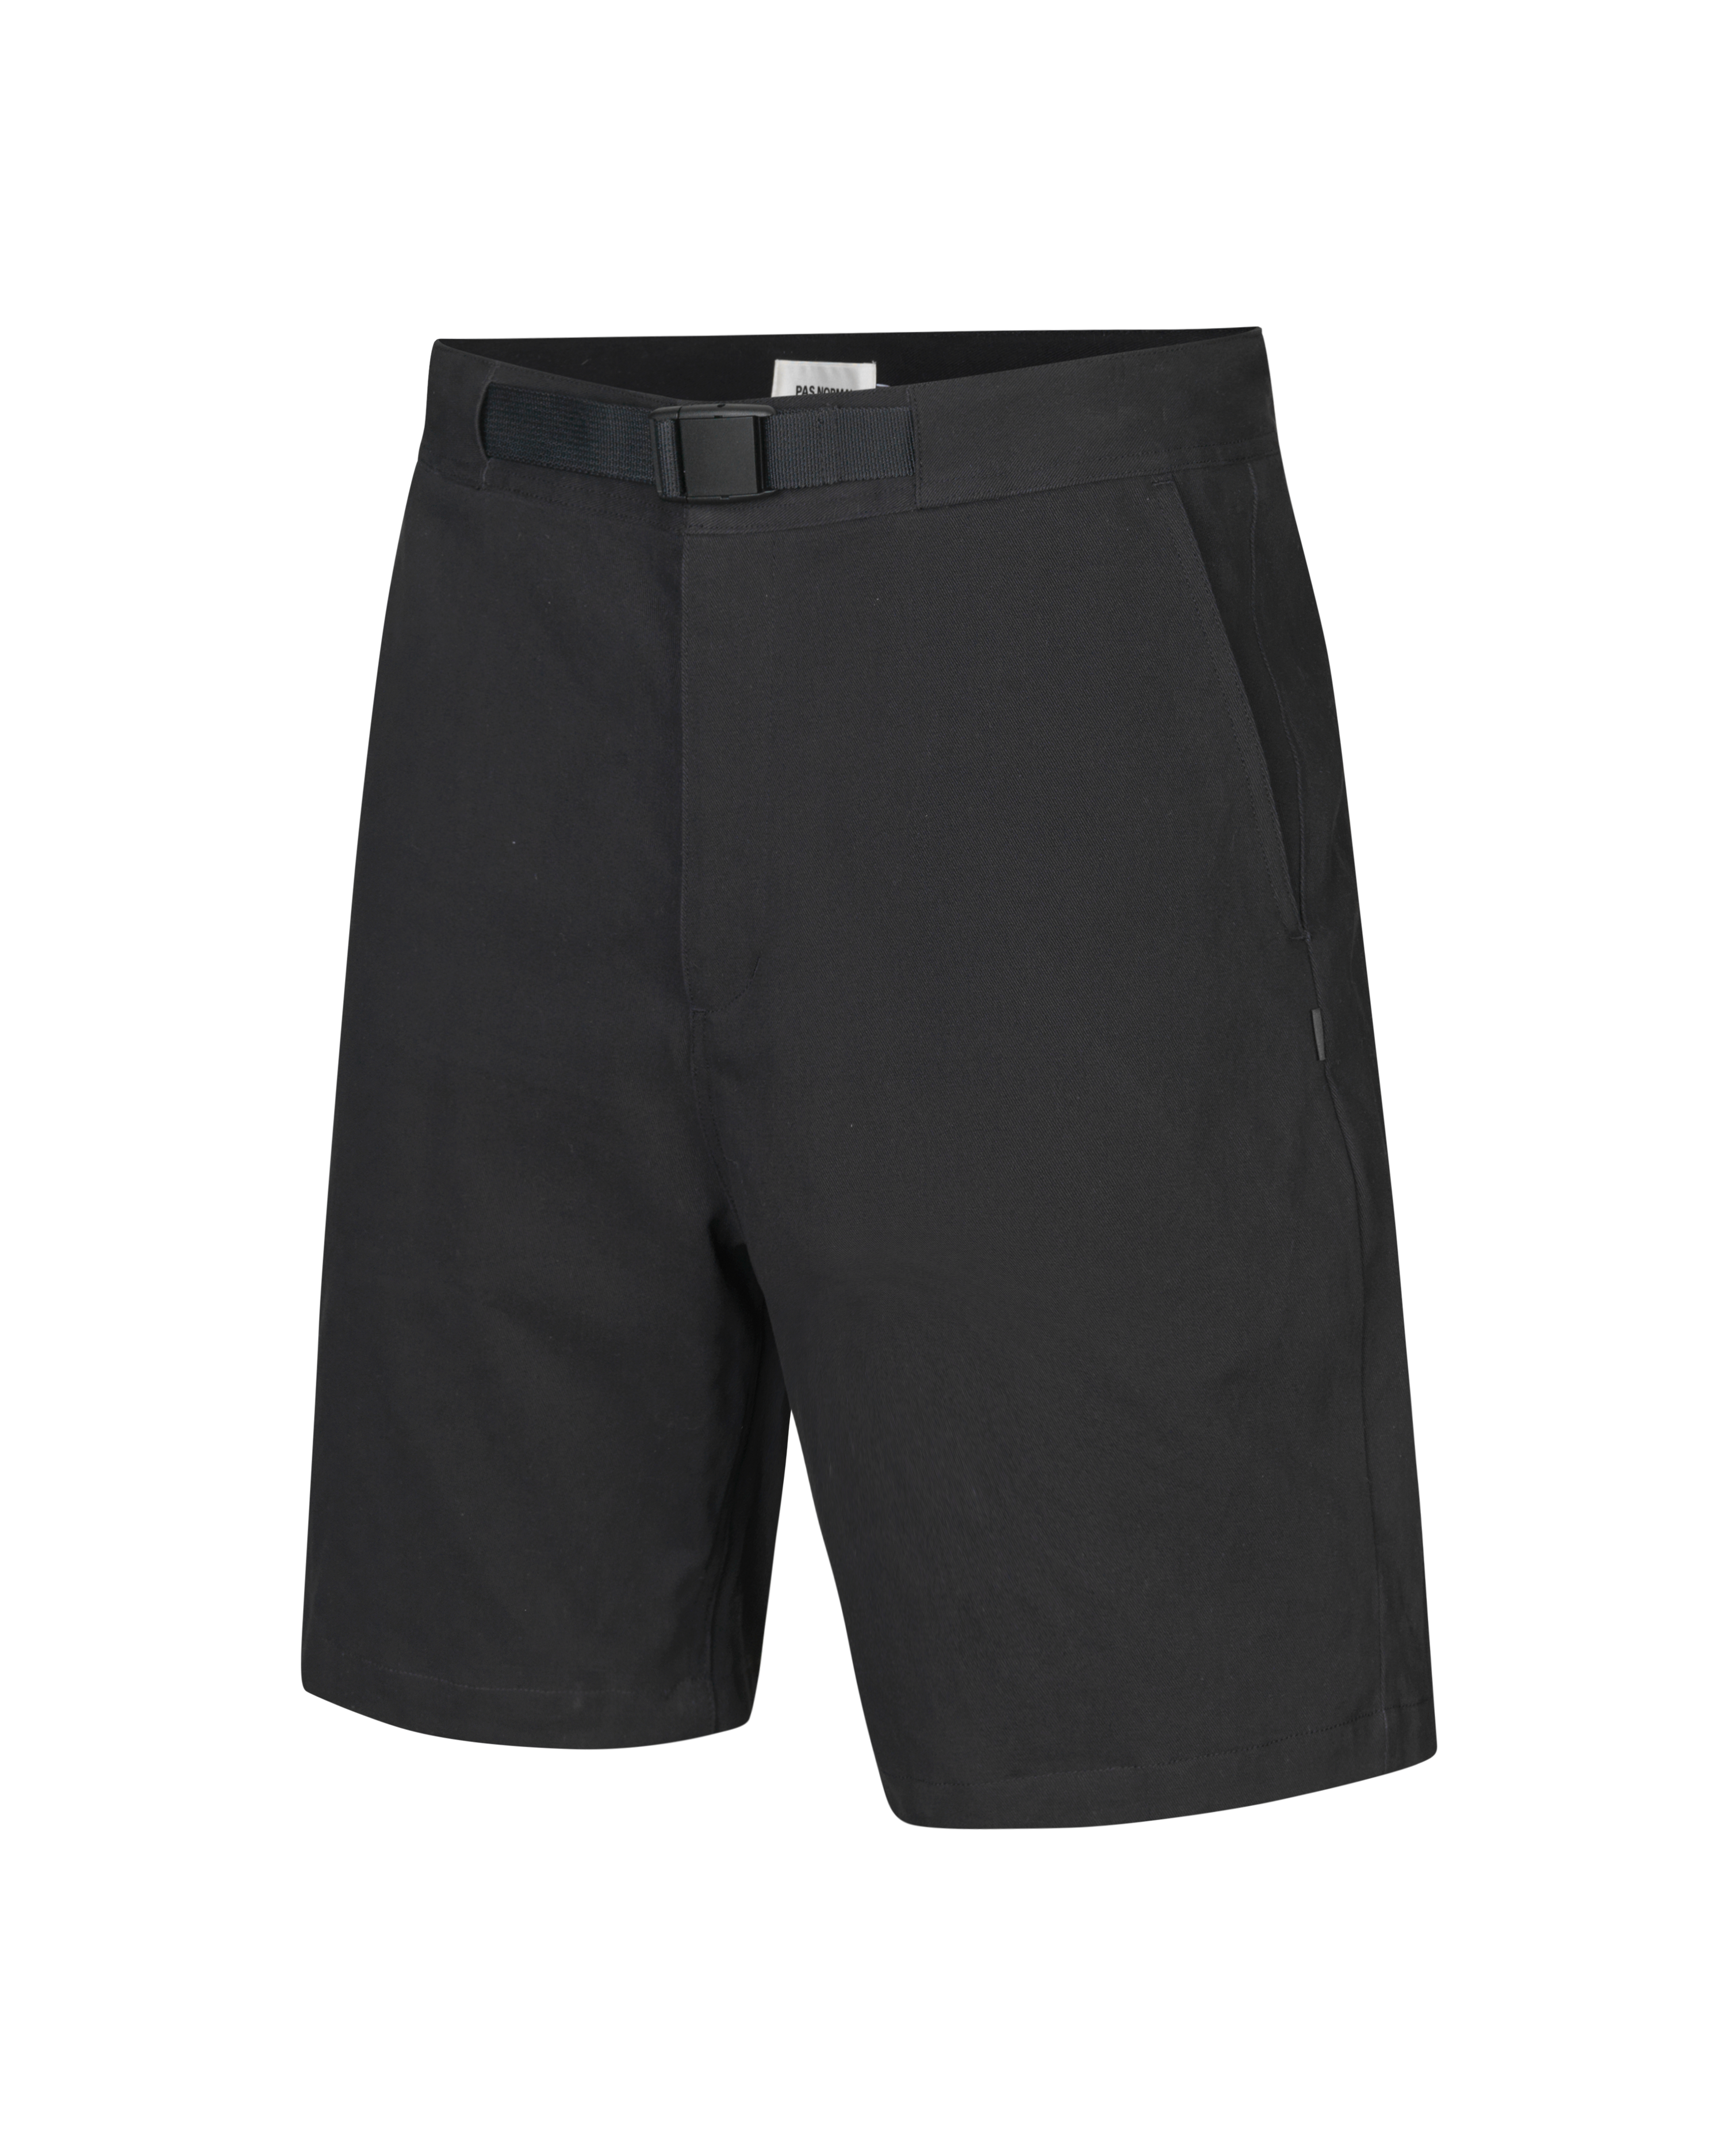 Off-Race Cotton Twill Shorts - Black